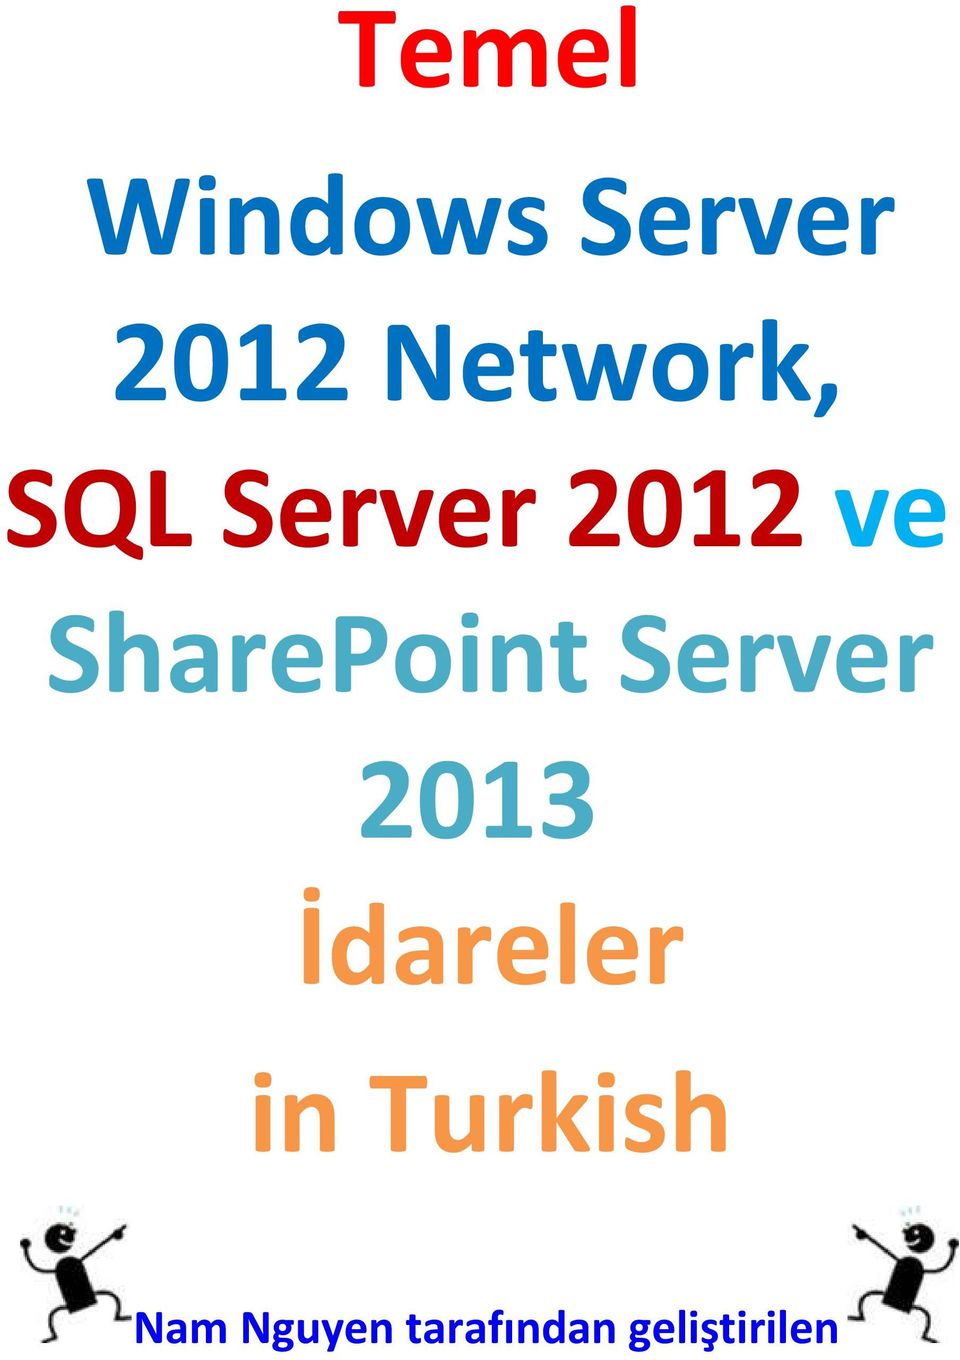 SharePoint Server 2013 İdareler